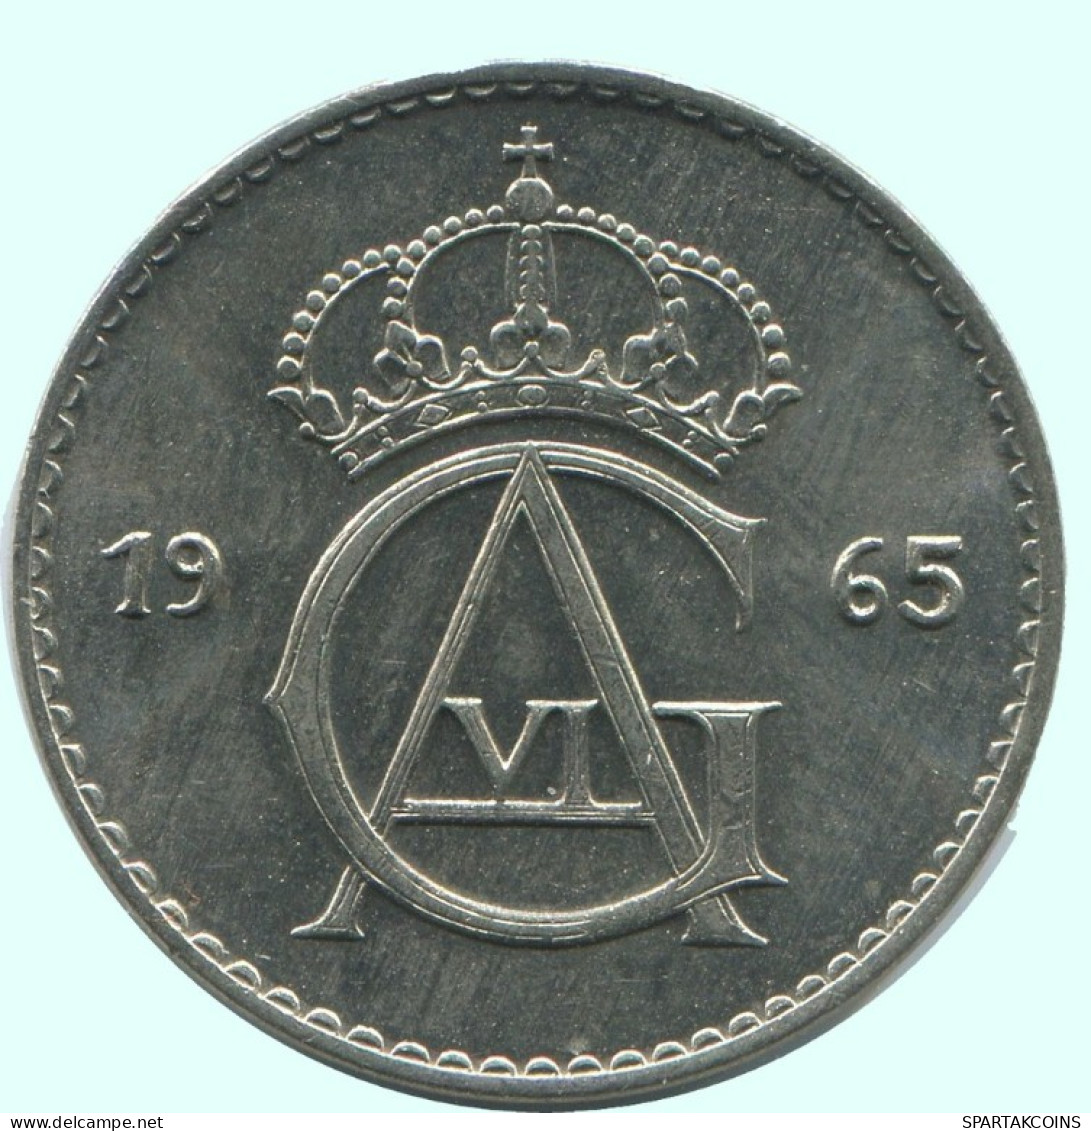 50 ORE 1965 SWEDEN Coin #AC724.2.U.A - Sweden